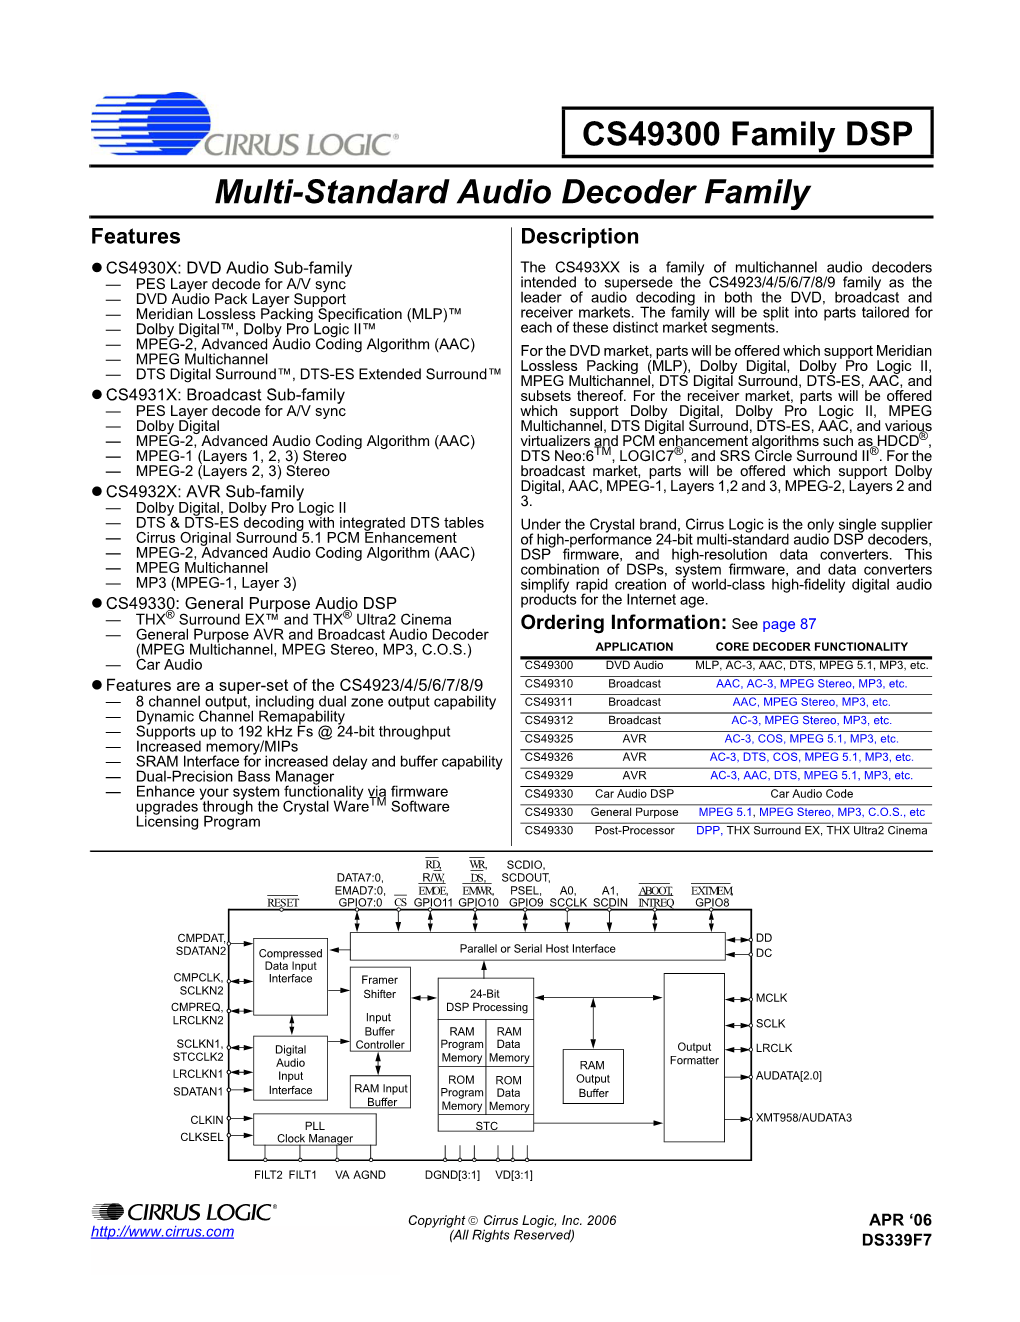 CS49300 Family DSP Multi-Standard Audio Decoder Family